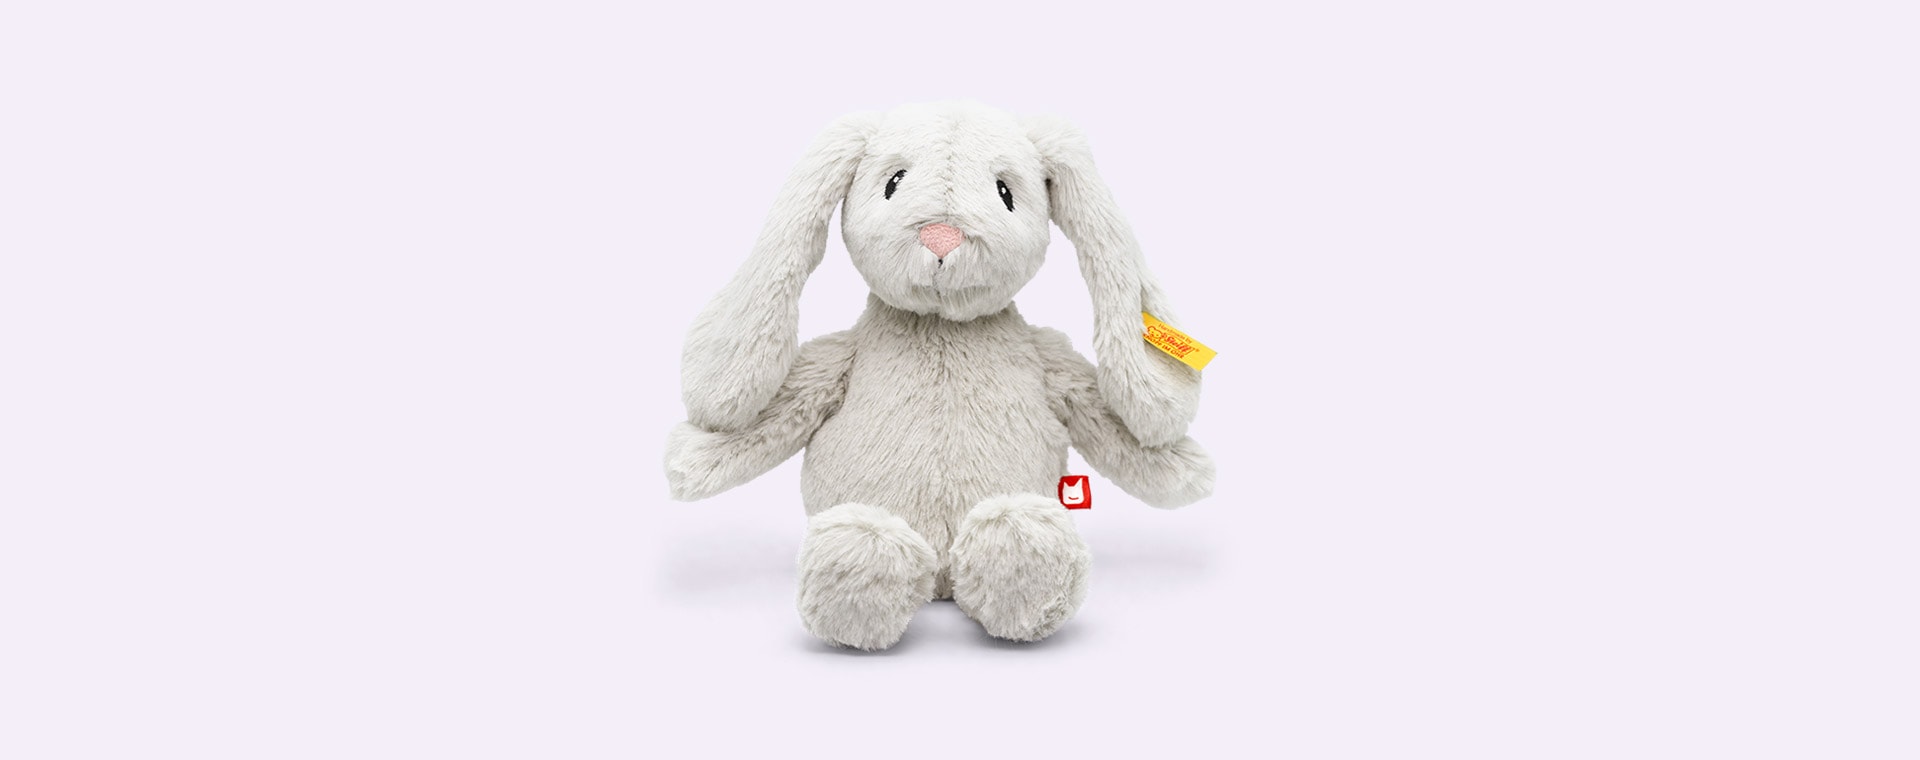 Hoppie Rabbit Audio Play Tonies Tonies / Steiff - Soft Cuddly Friend